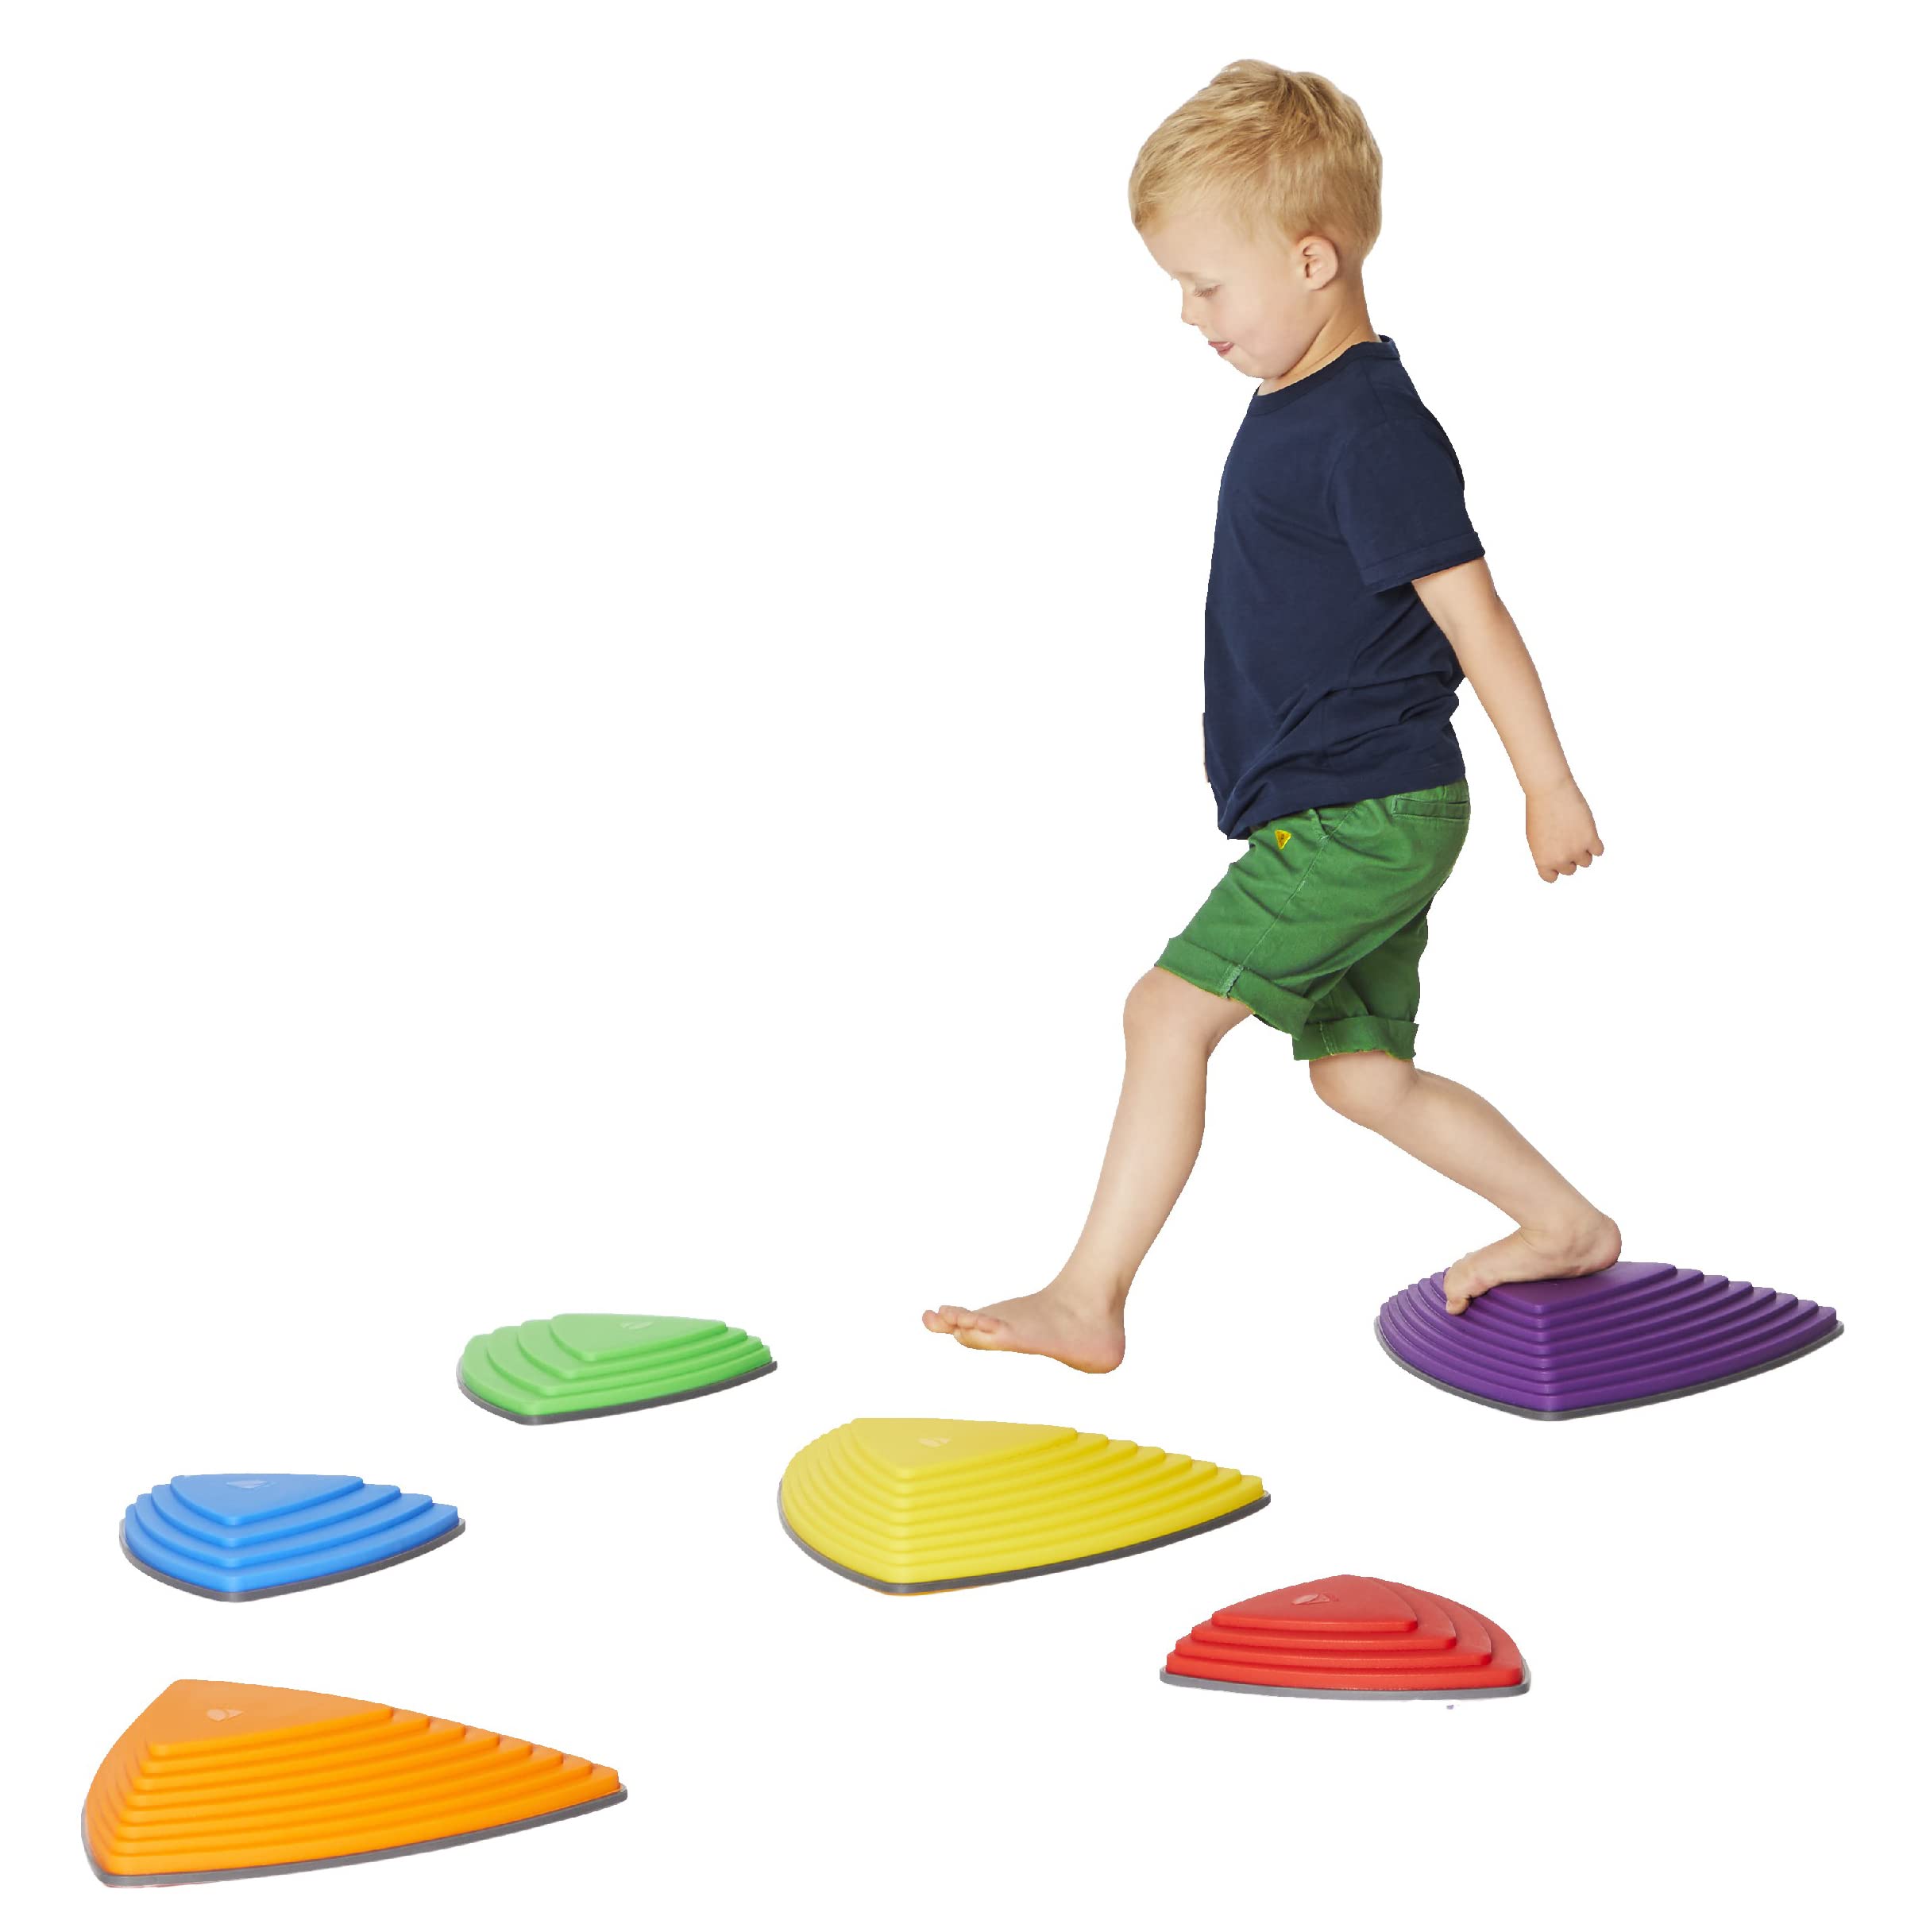 GONGE River Stones - The Original Non-Slip Stepping Stones for Kids - Balance, Coordination, Motor Skills - Vibrant Colors - Set of 6